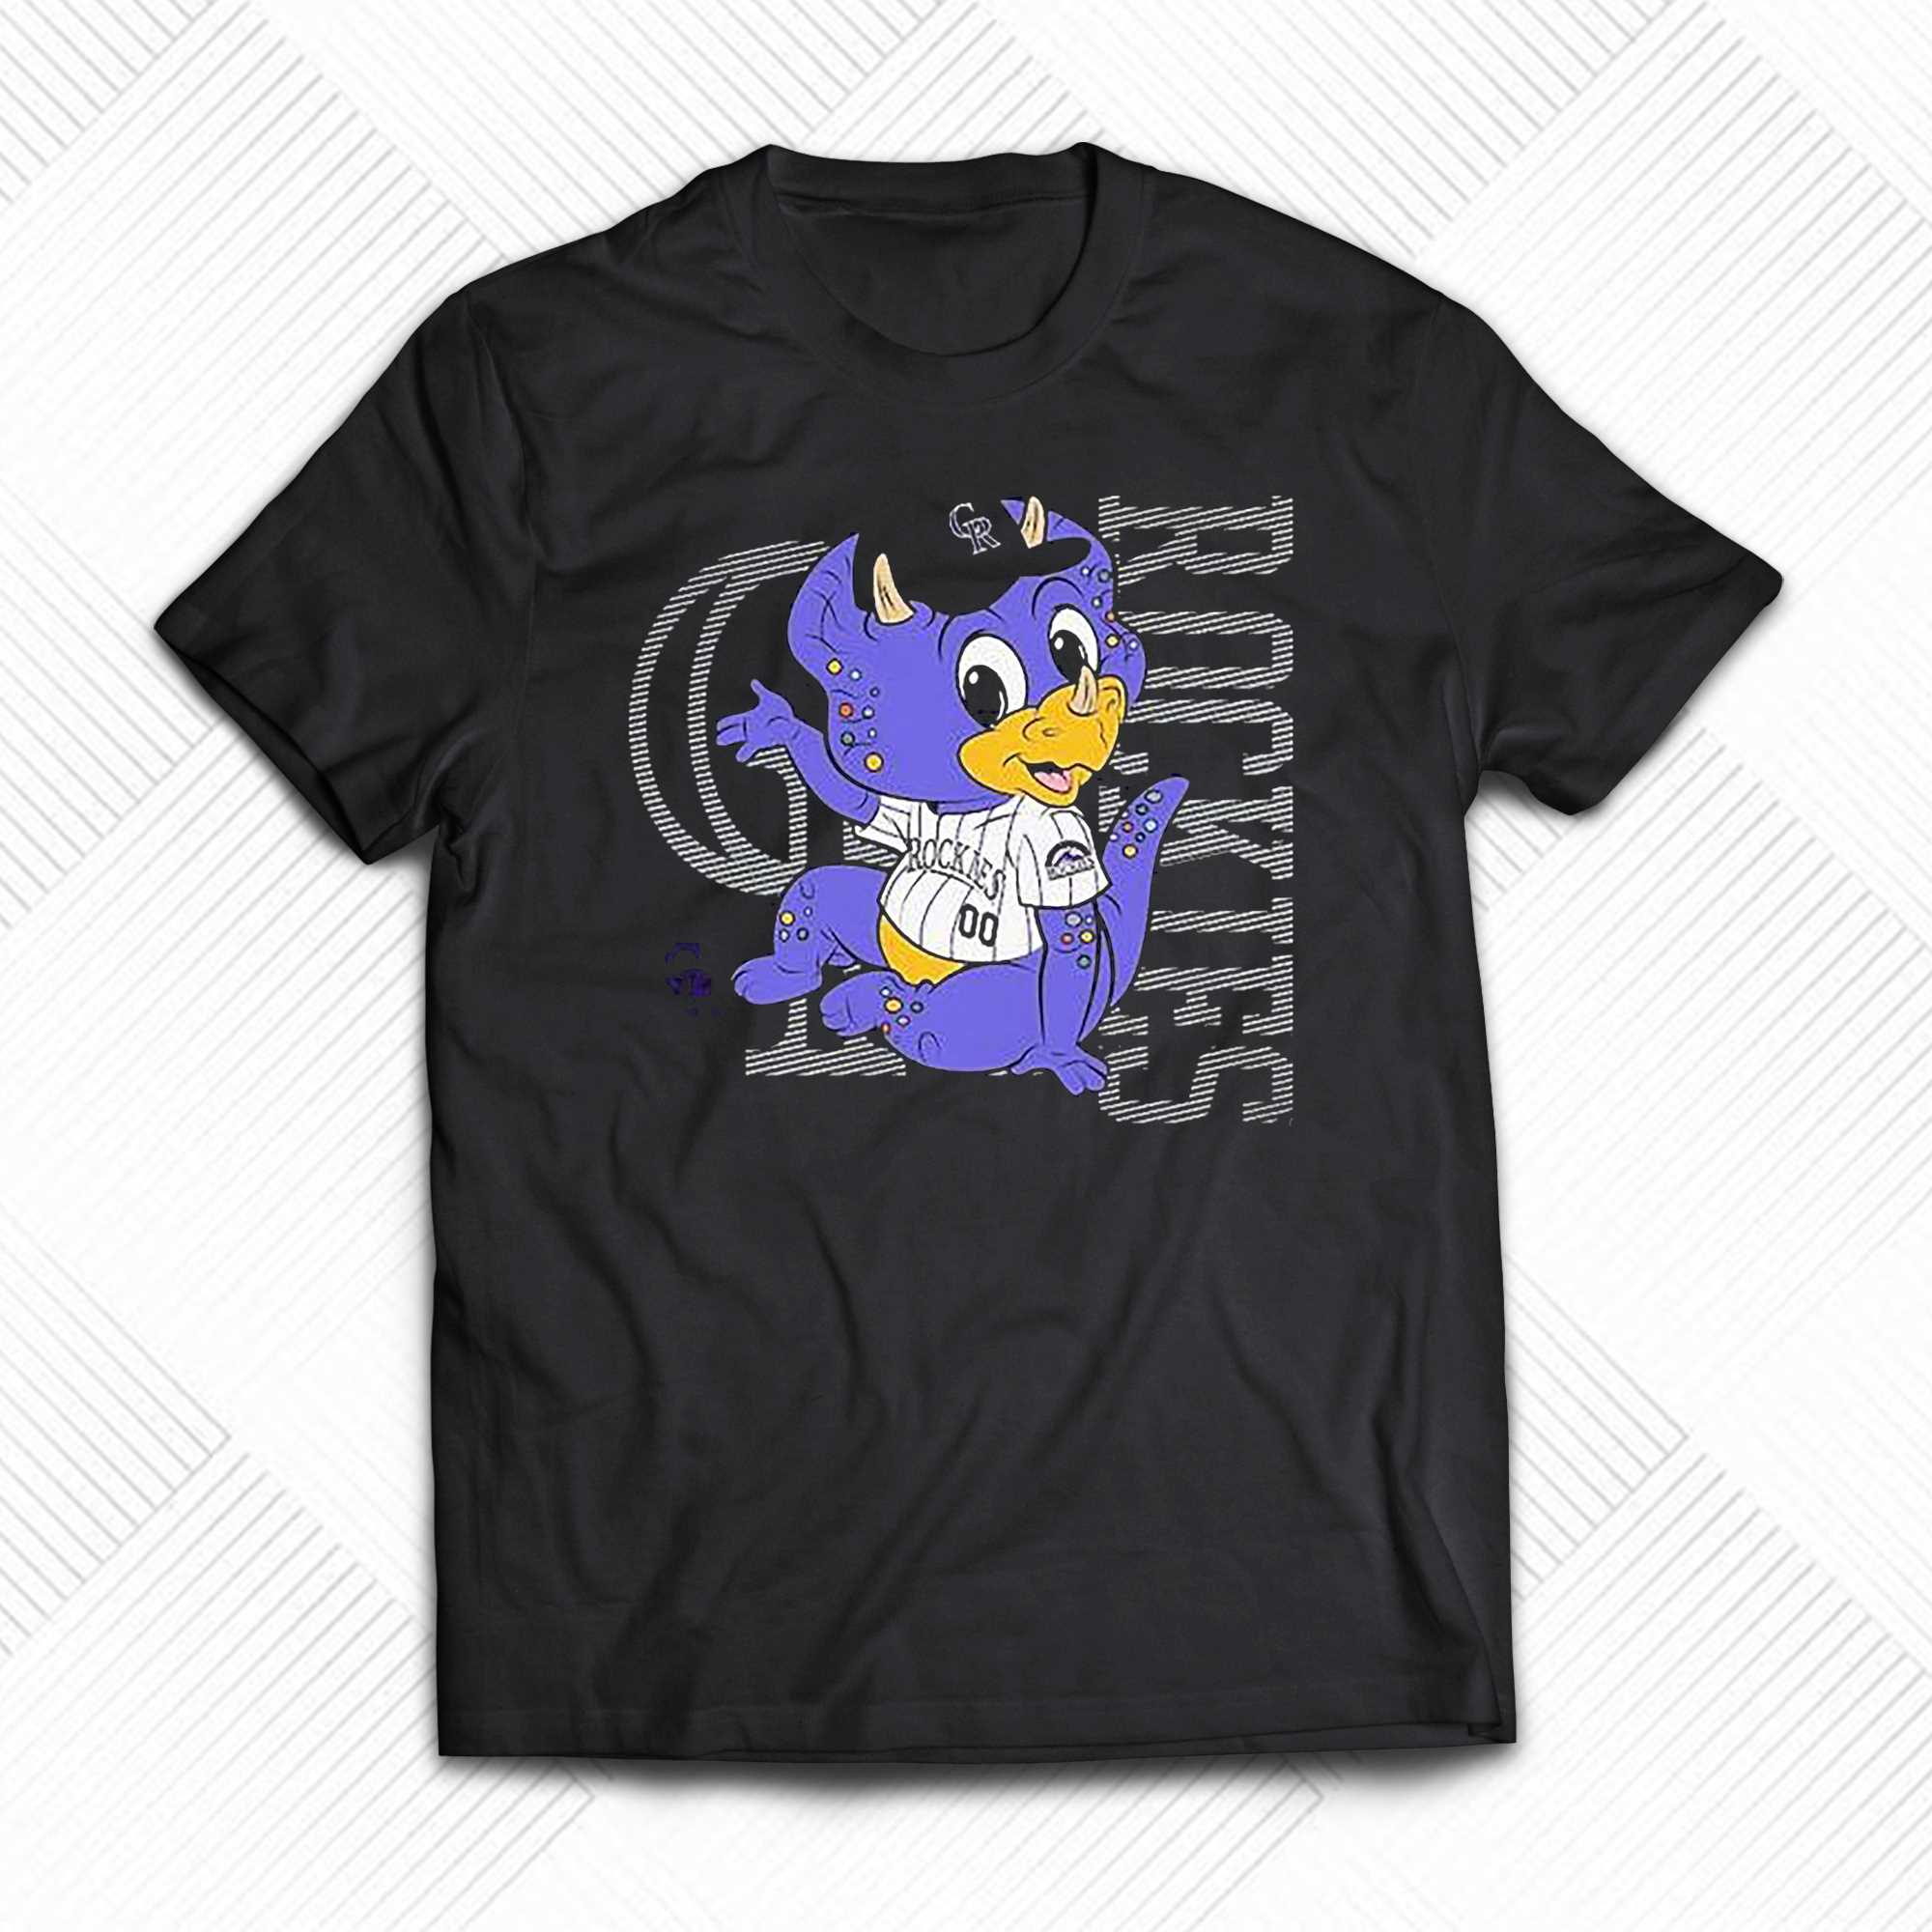 Colorado Rockies Mascot Dinger Shirt